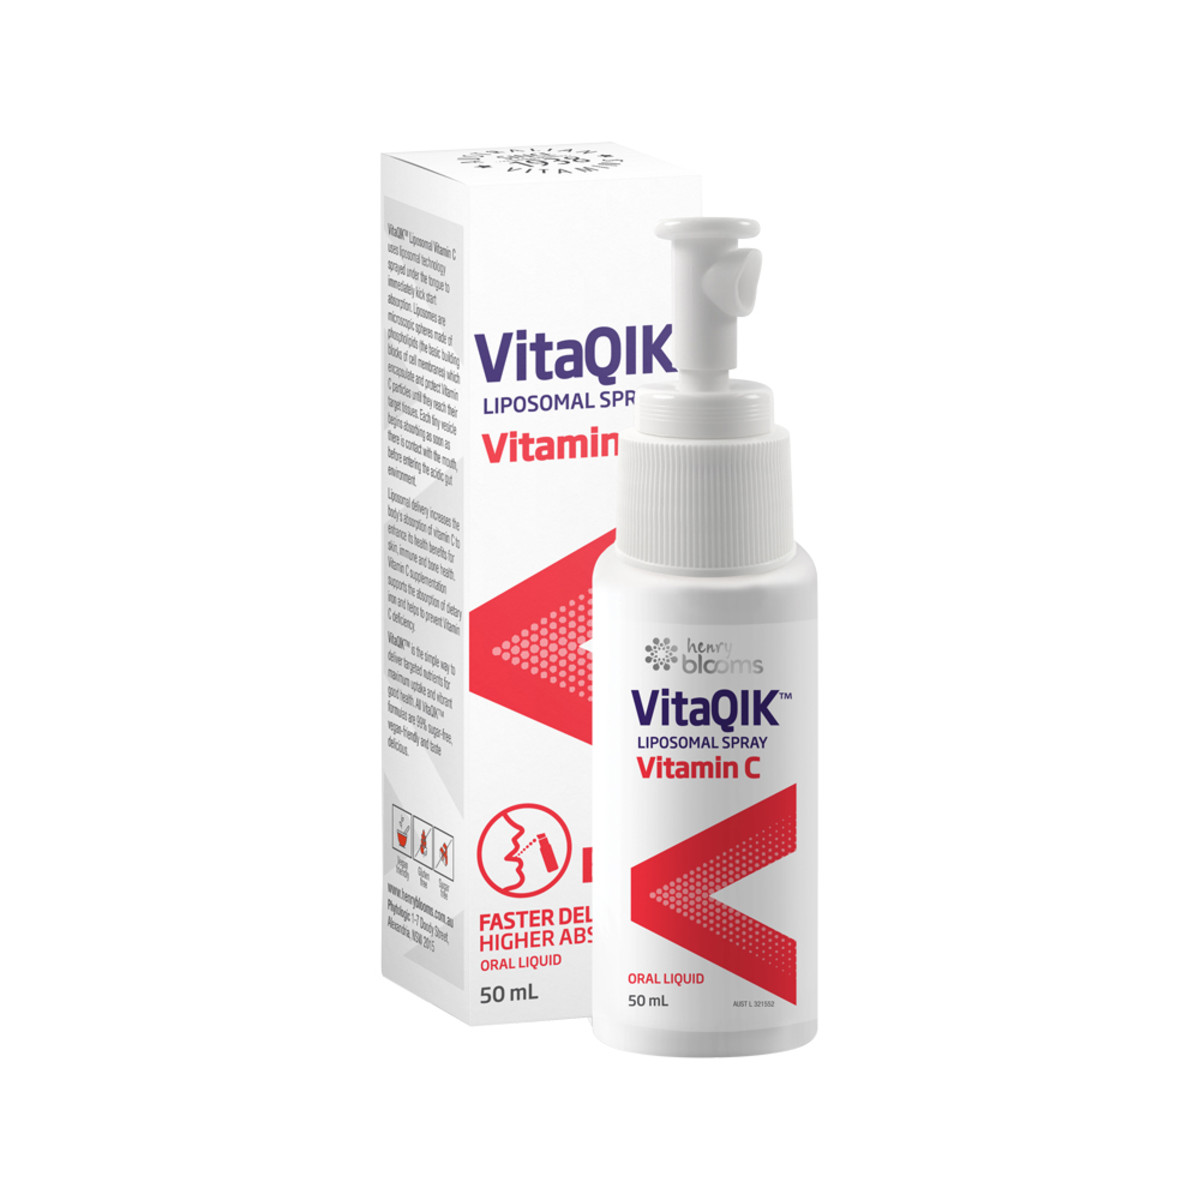 HENRY BLOOMS - VitaQIK Liposomal Spray Vitamin C